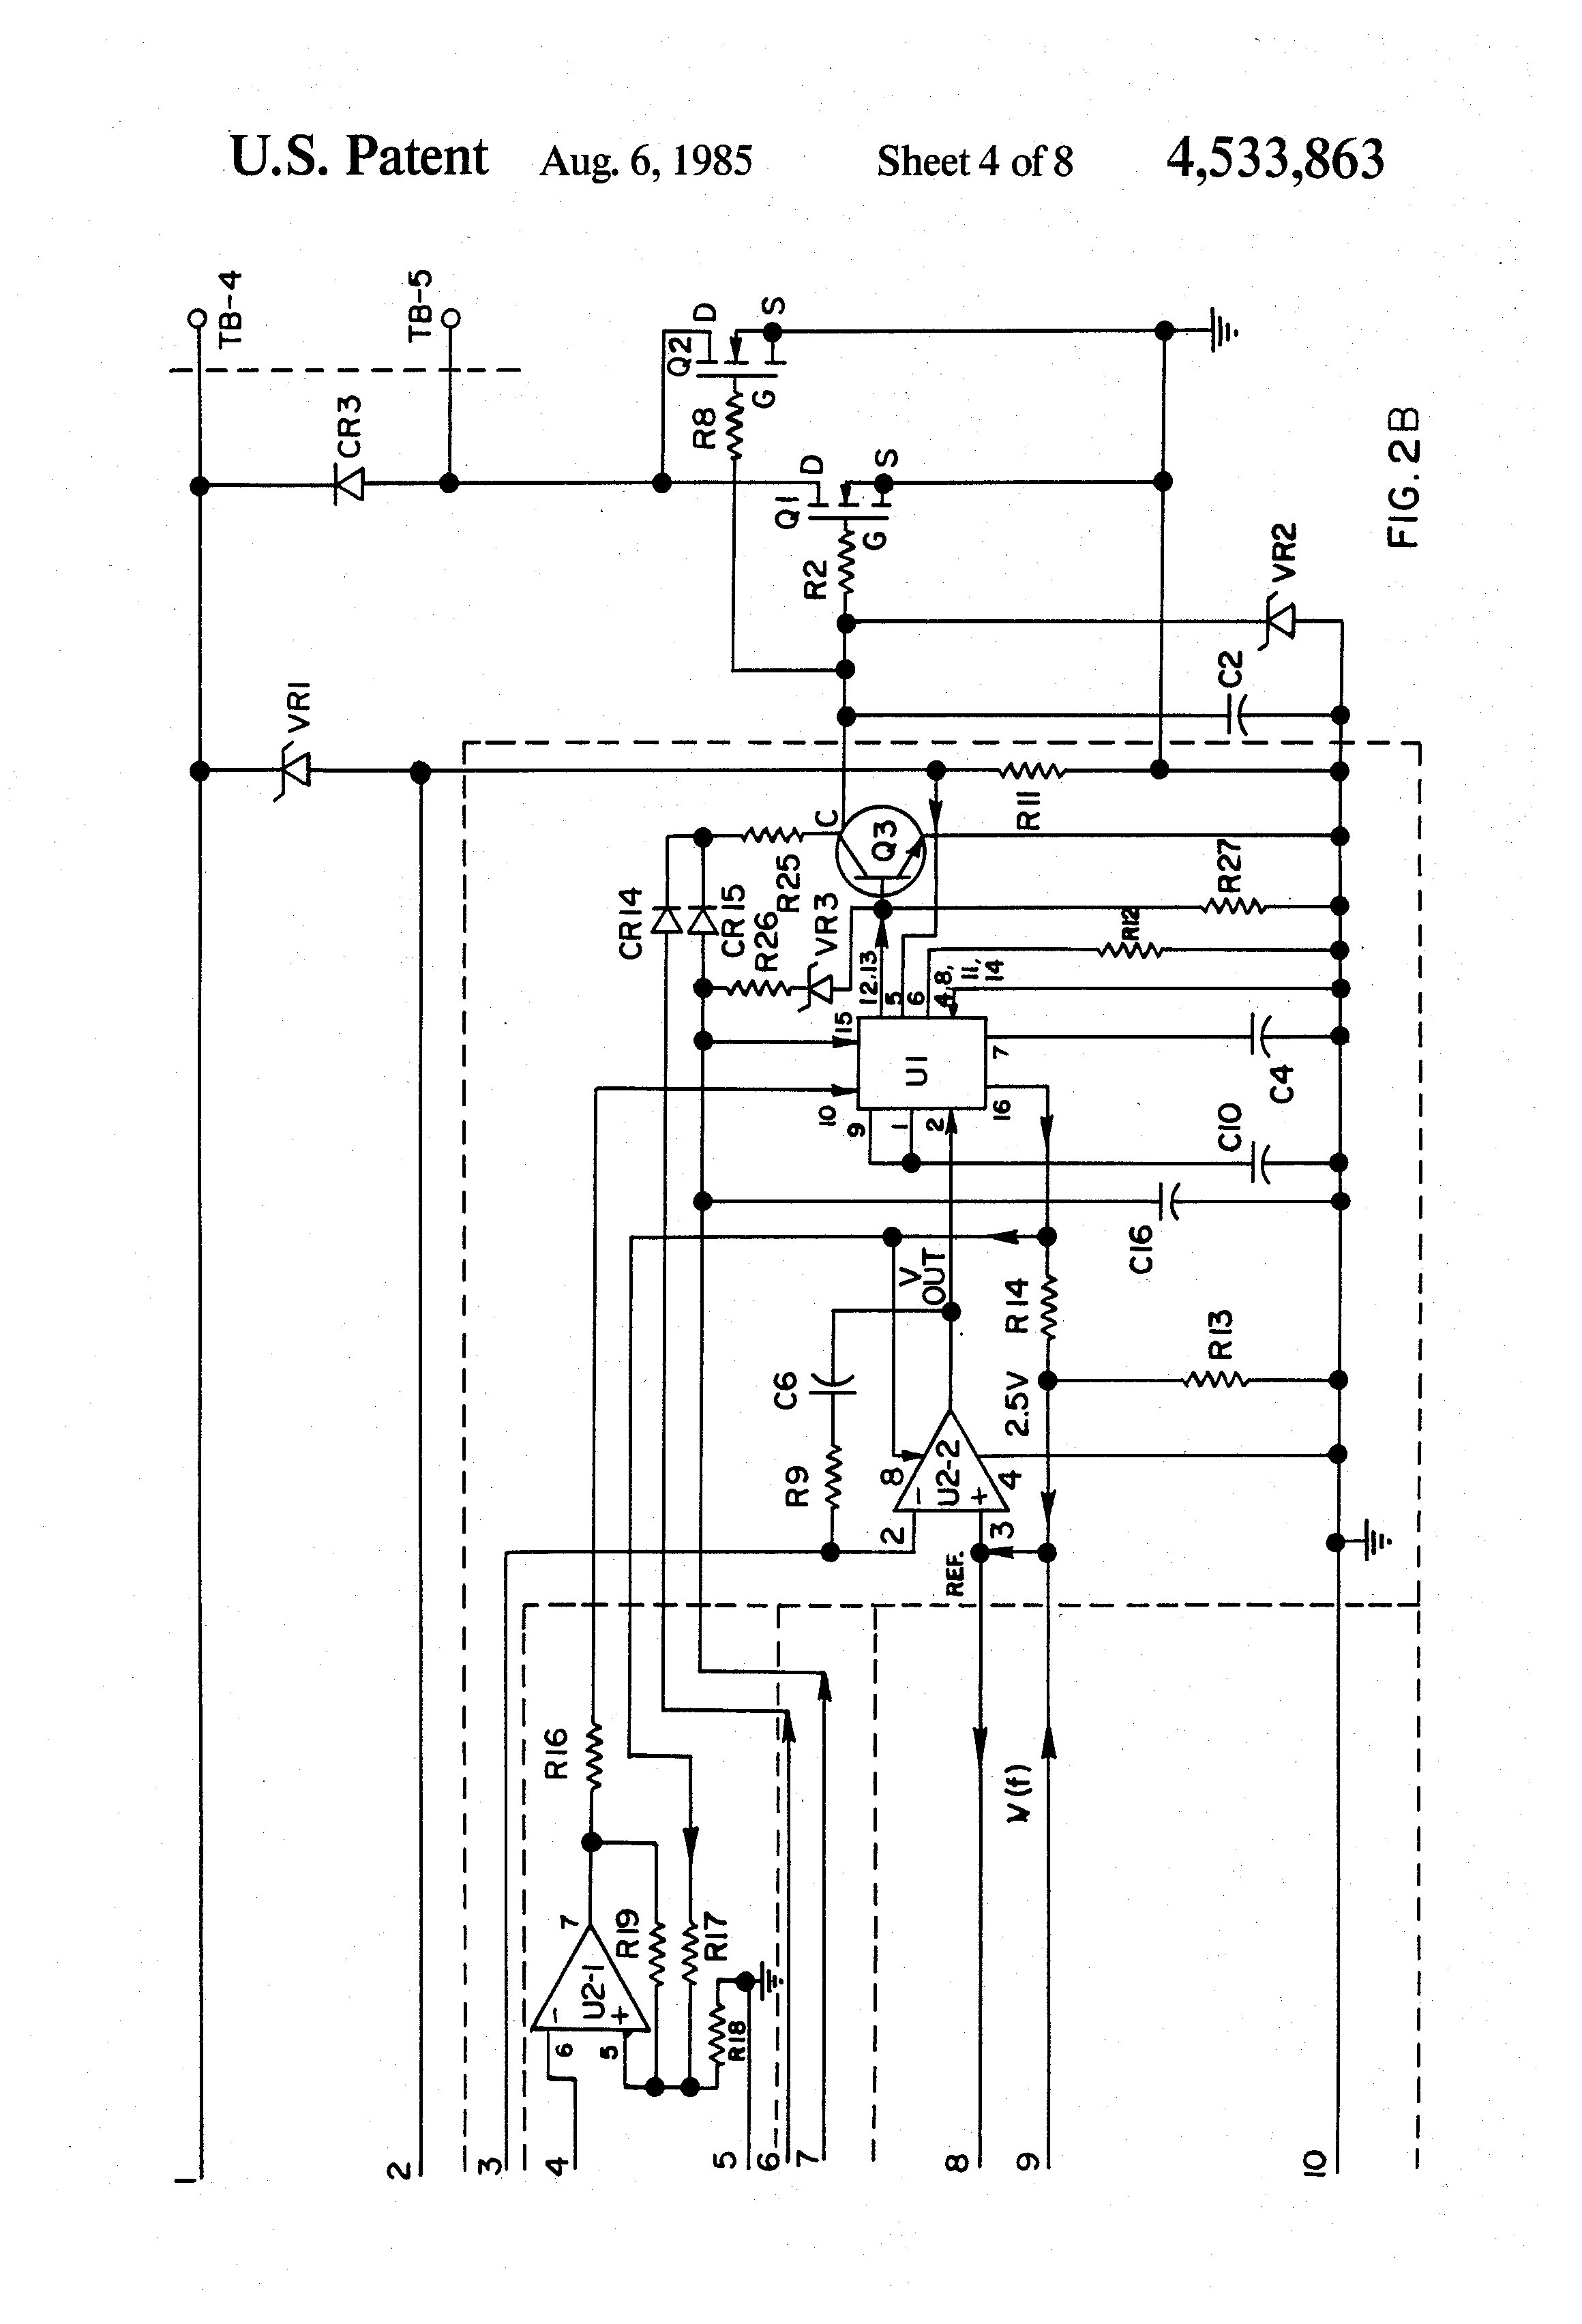 Wiring Diagram for Voltage Regulator Save ford 3000 Voltage Regulator Wiring Diagram Beautiful Patent Us